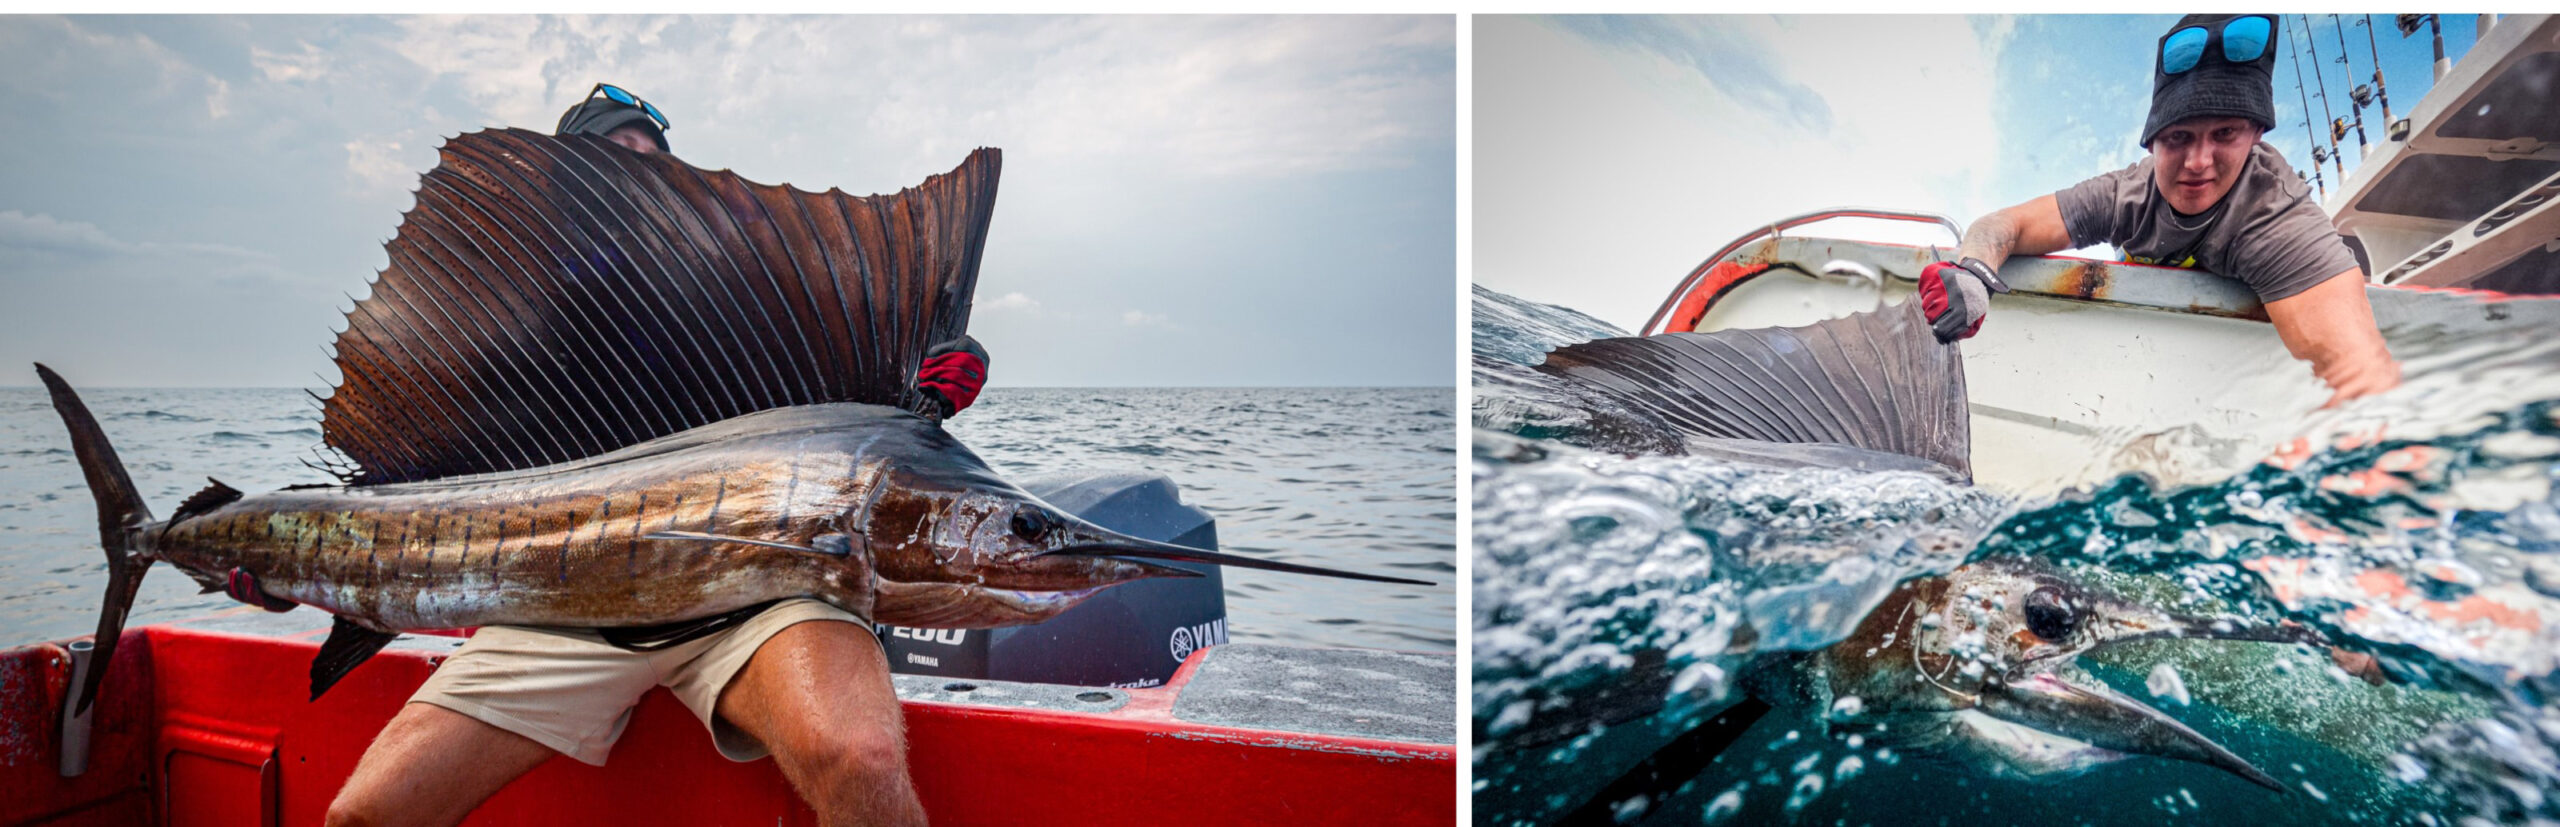 malaysia kualarompin sailfish collage3 3200 1 scaled Angelreise Malaysia